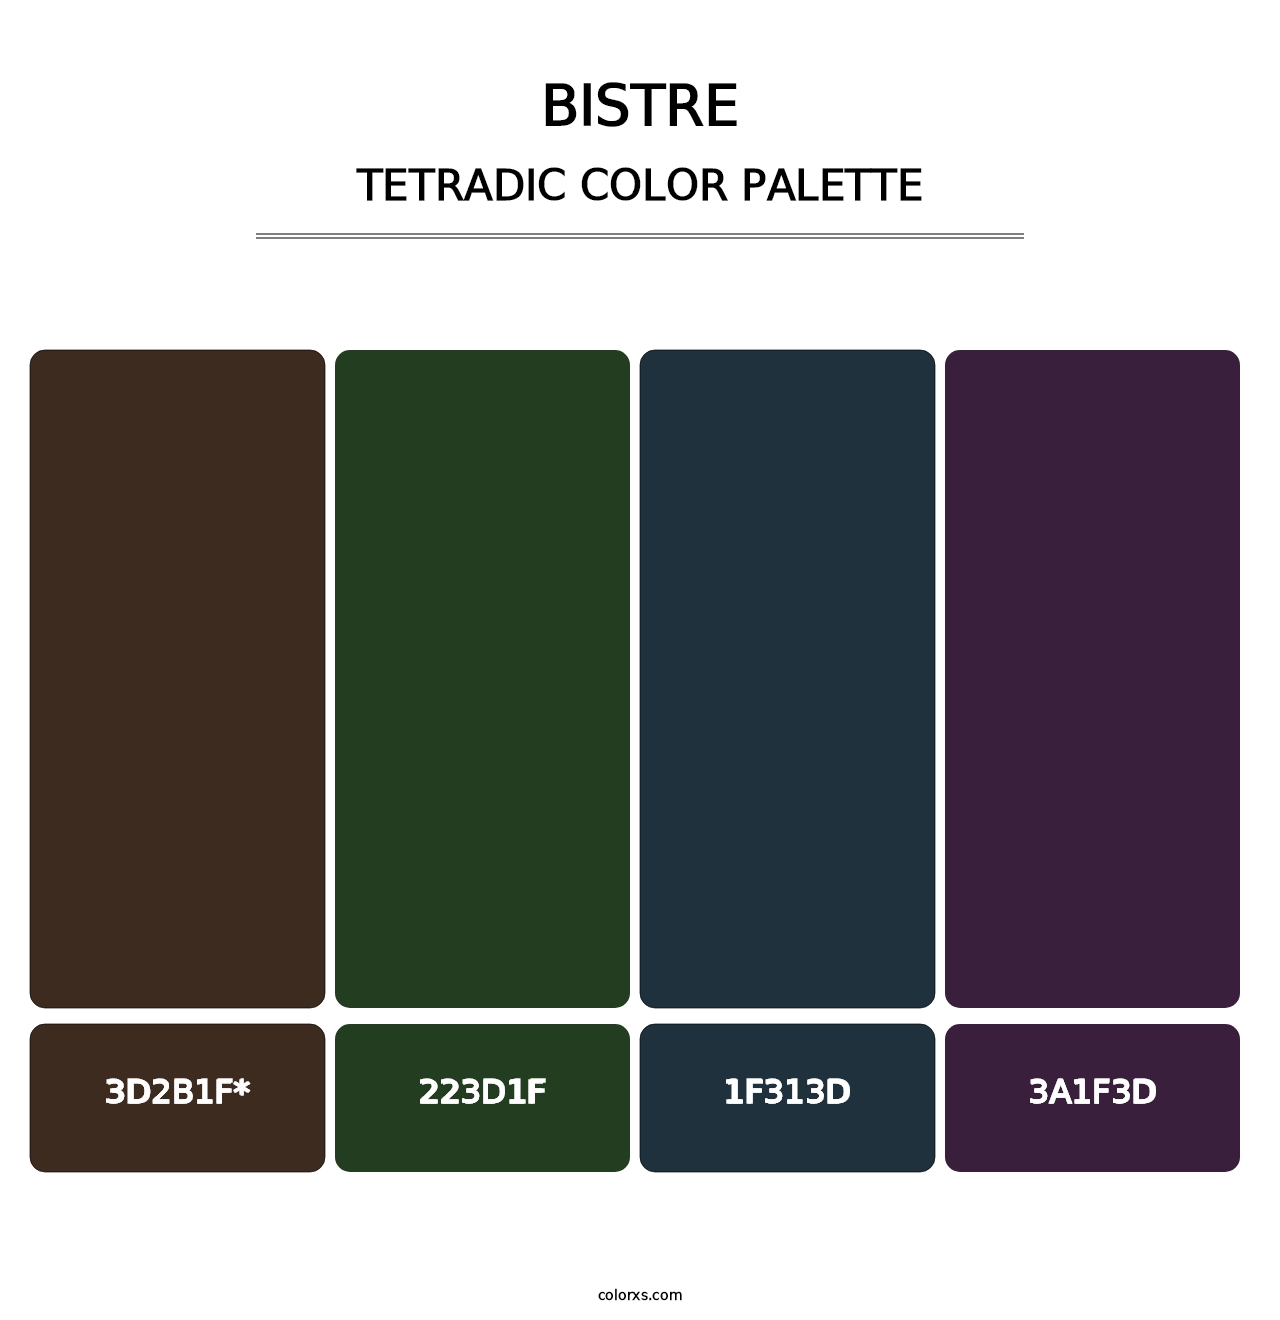 Bistre - Tetradic Color Palette